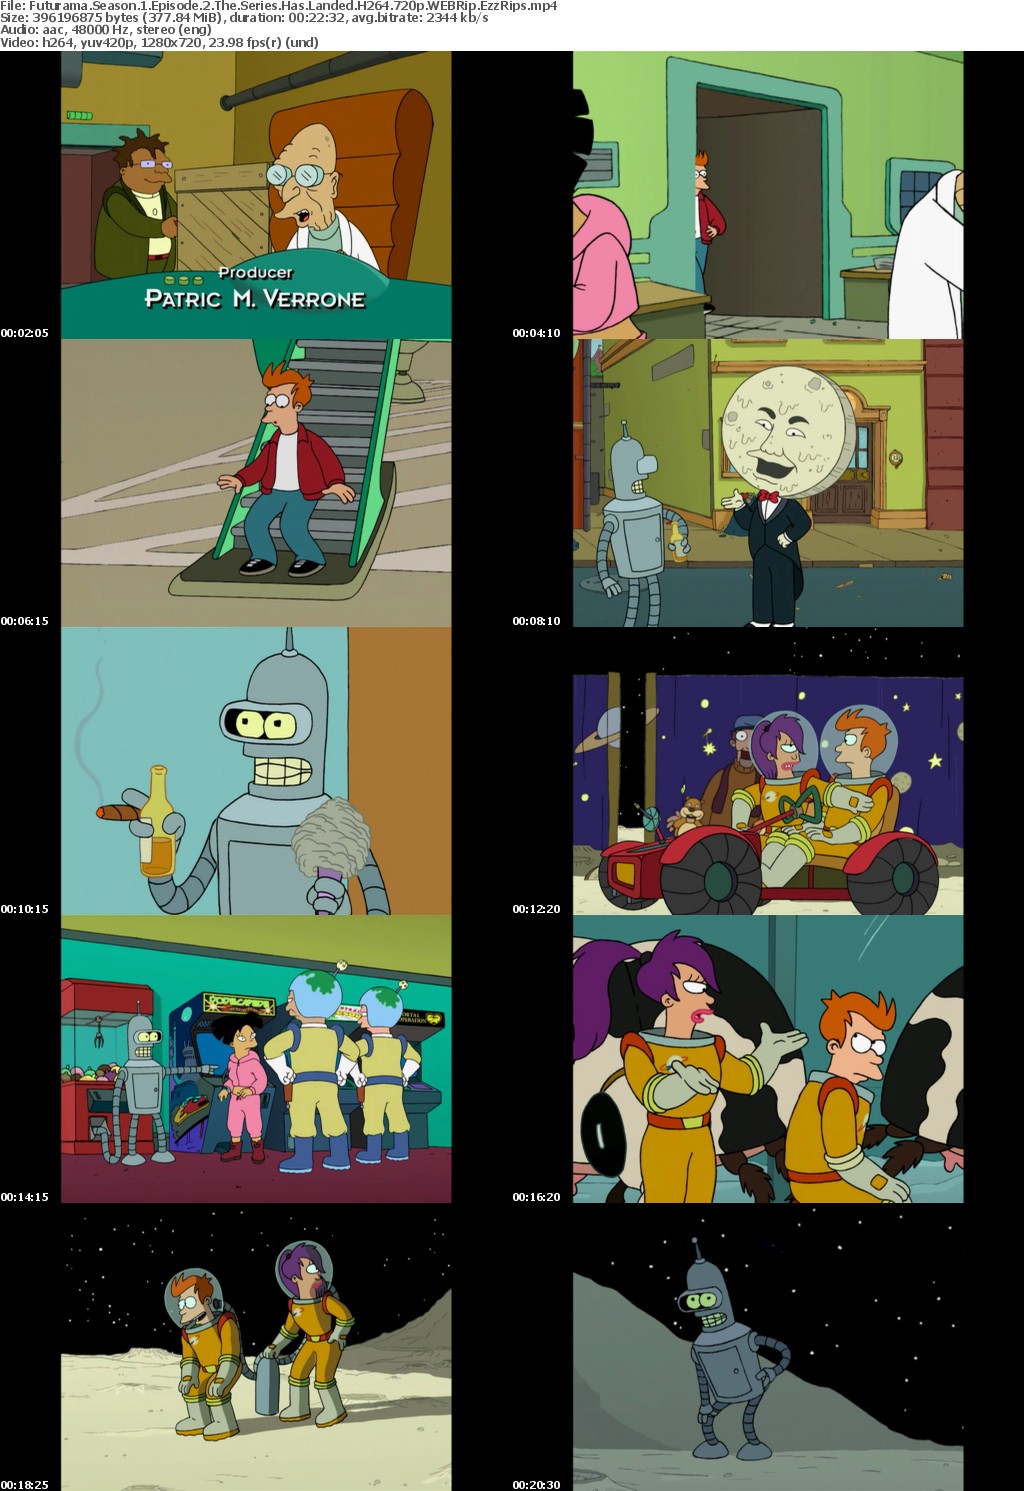 Futurama Season 1 Episode 2 The Series Has Landed H264 720p WEBRip EzzRips